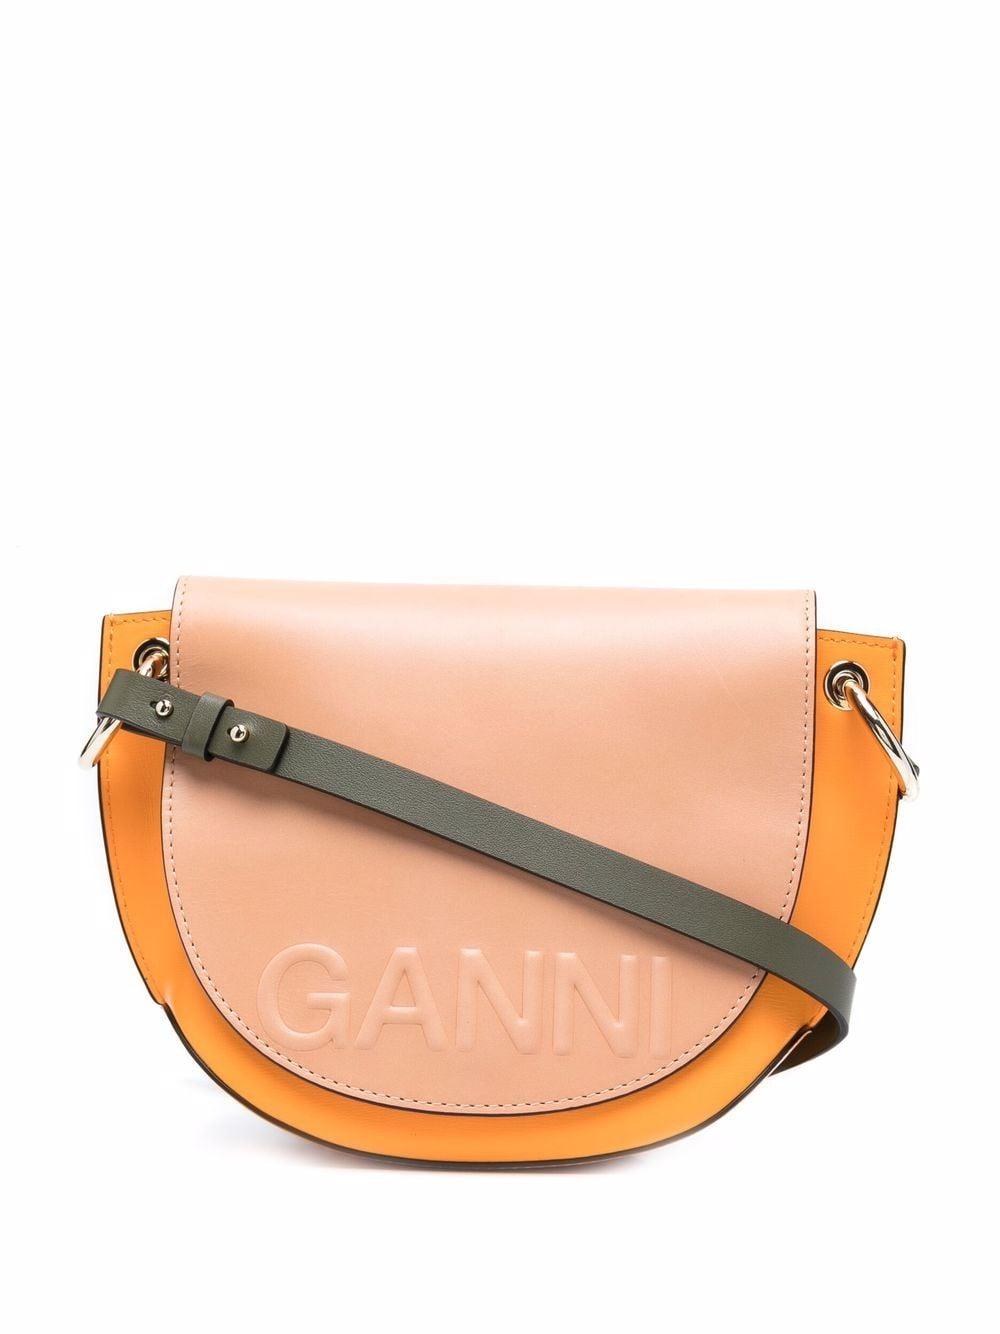 Ganni Recycled-leather Saddle Bag in Orange | Lyst